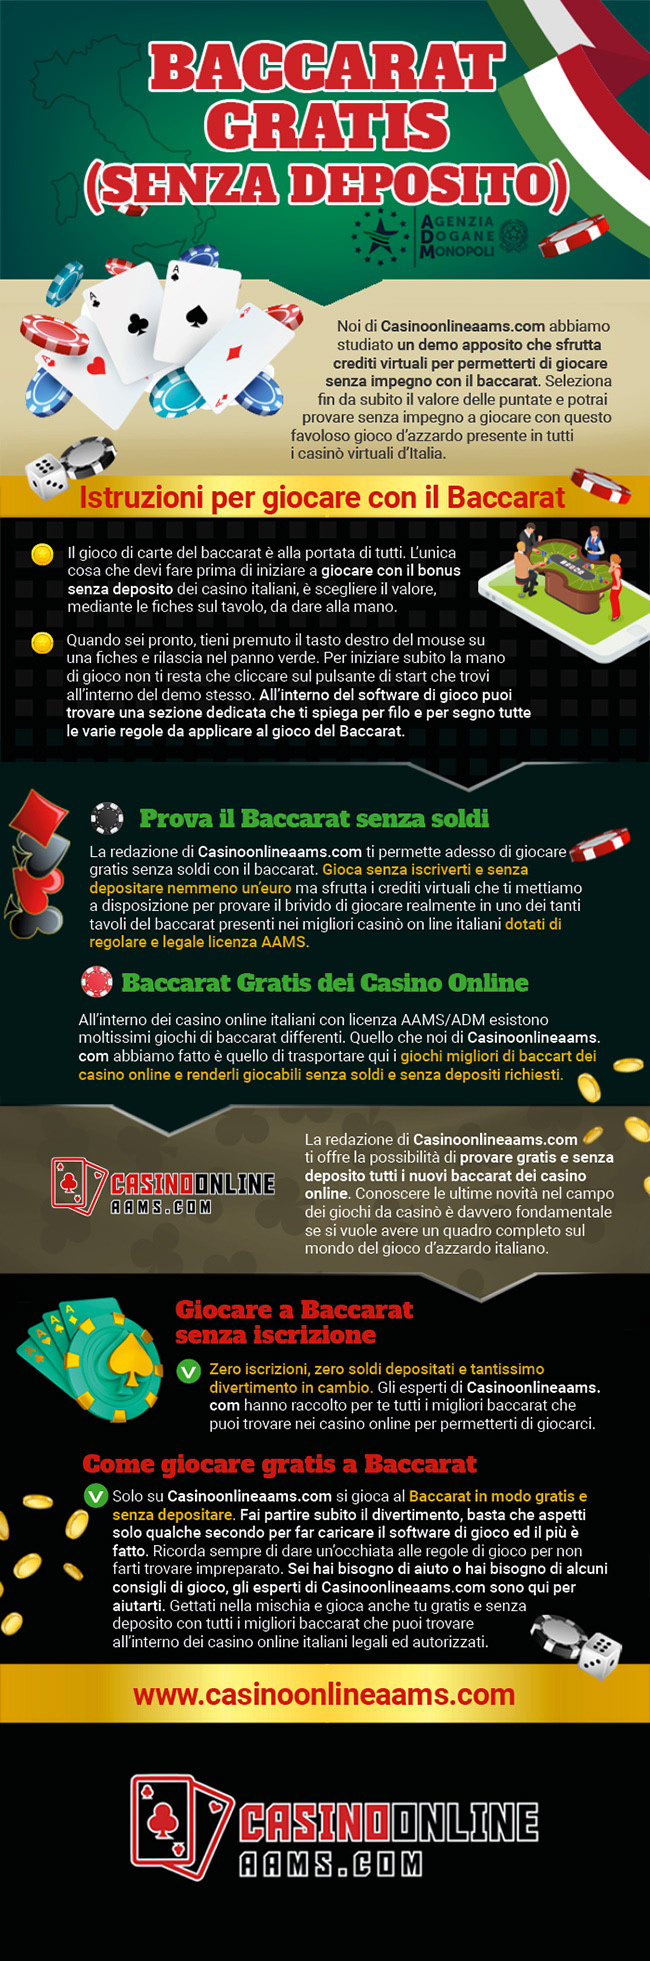 Casino Online poker online gratta e vinci casino bingo online giochi online lotterie online scommesse online бонус